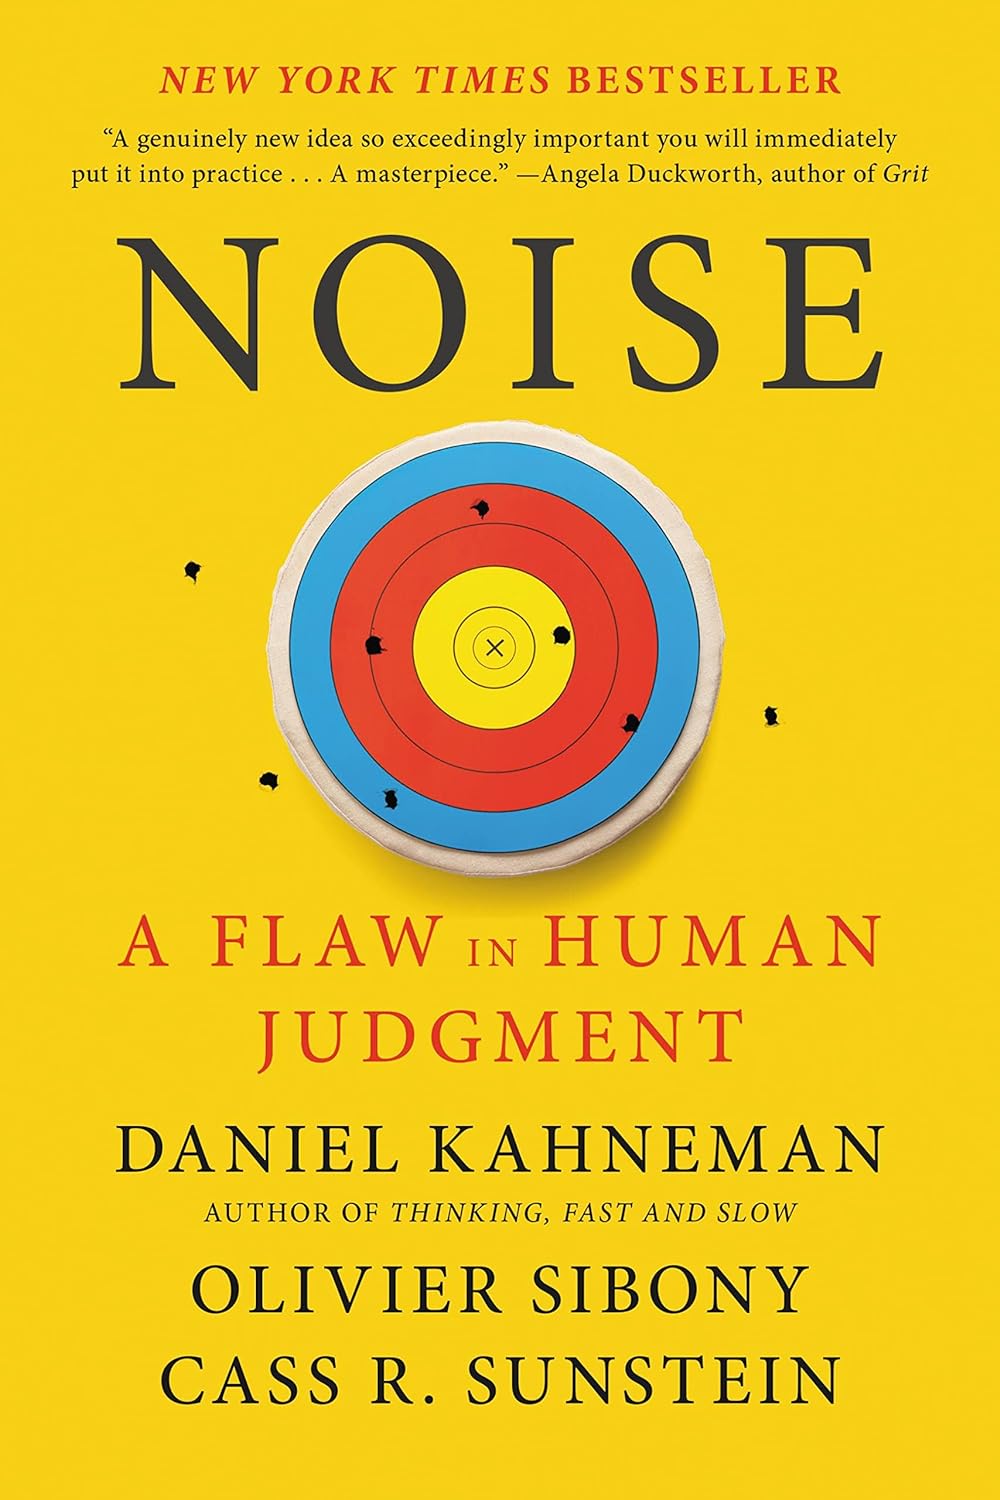 Olivier Sibony, Daniel Kahneman, Cass R. Sunstein: Noise: A Flaw in Human Judgment (2021, Little, Brown Spark)